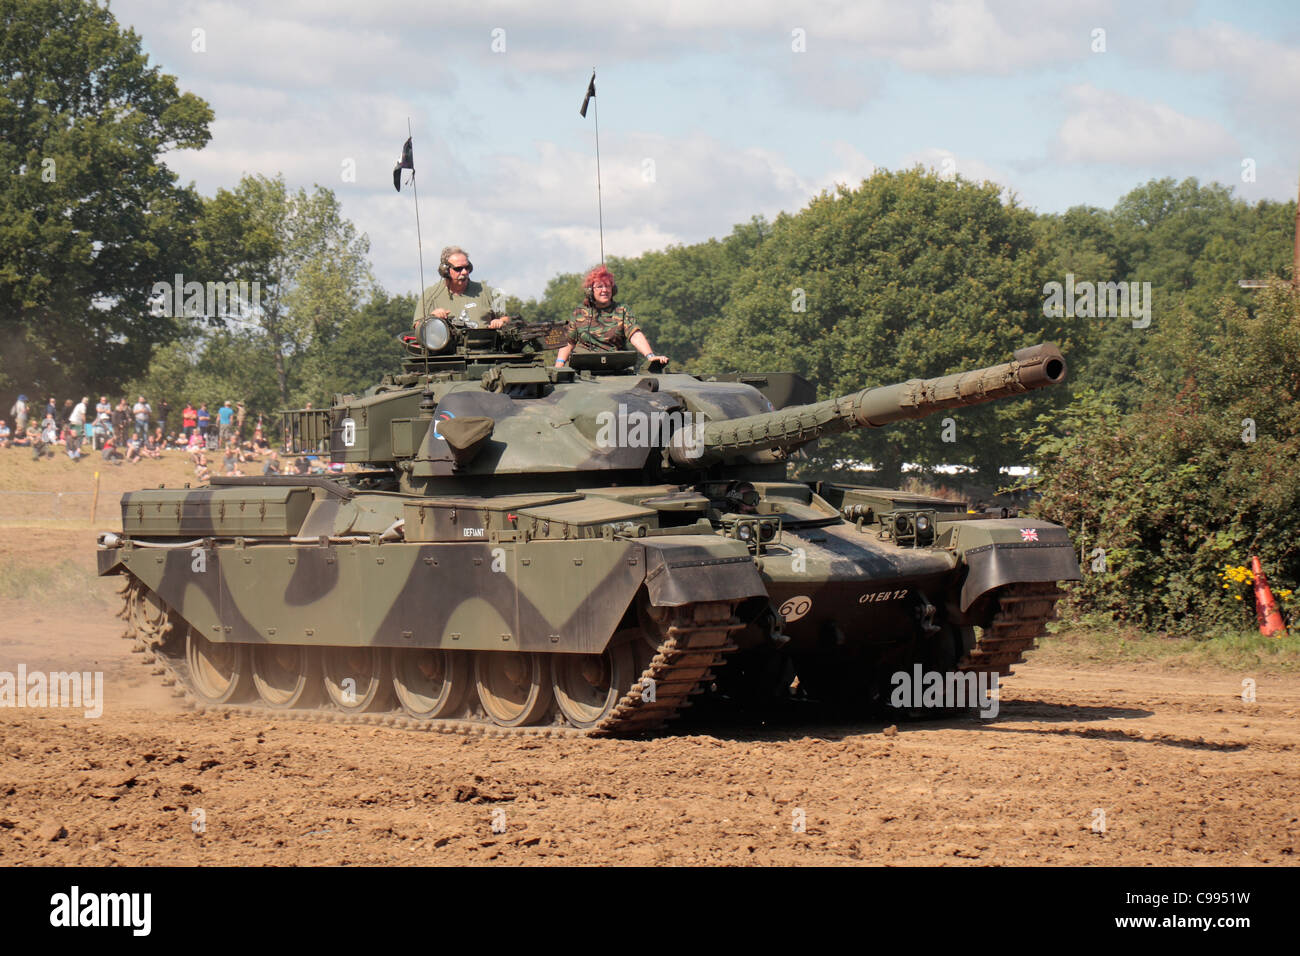 A British Chieftain tank on display at the 2011 War & Peace Show at Hop Farm, Paddock Wood, Kent, UK. Stock Photo